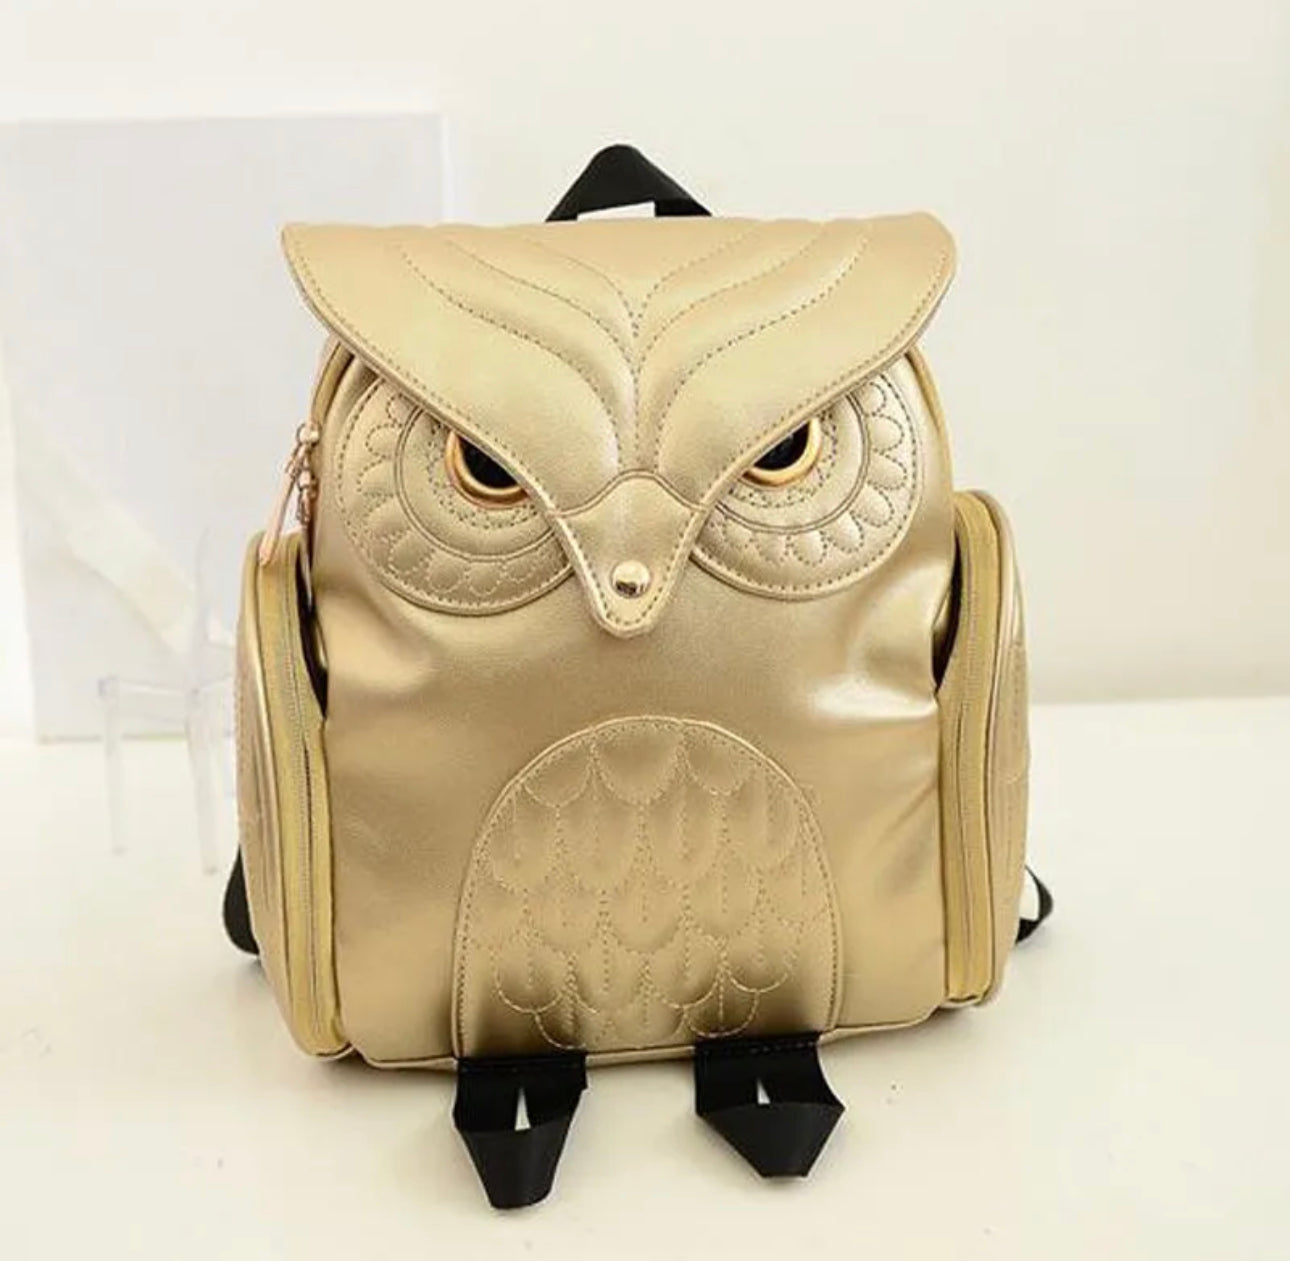 Owl Design Novelty Flap Backpack, Trendy Zipper Bookbag, Creative Schoolbag For Work & Travel